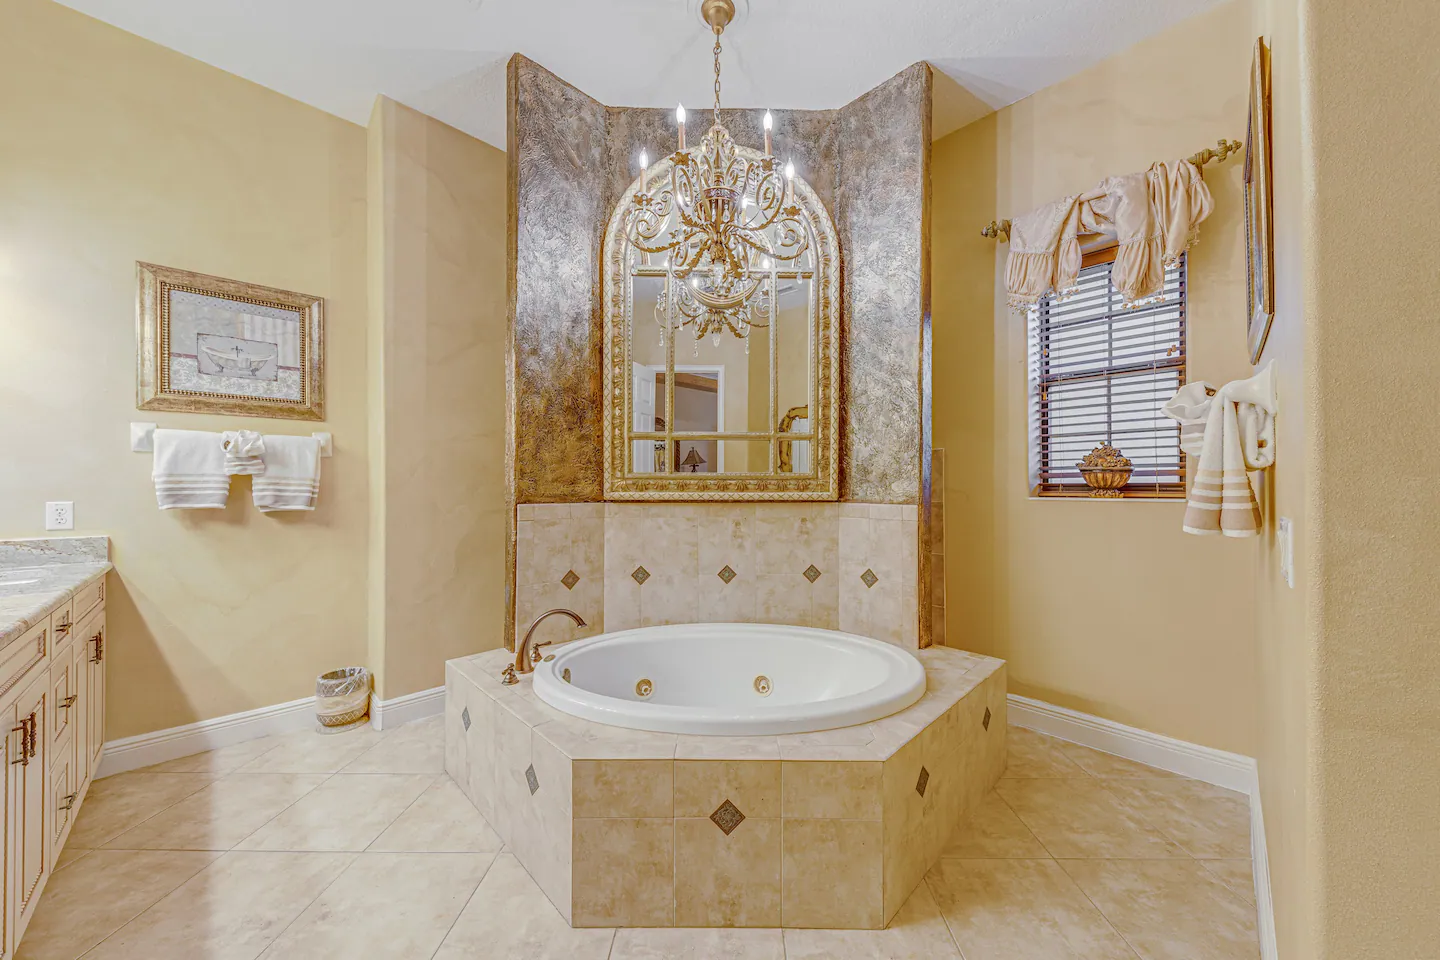 Custom bathroom with whirlpool tub, walk-through shower, and double sinks.